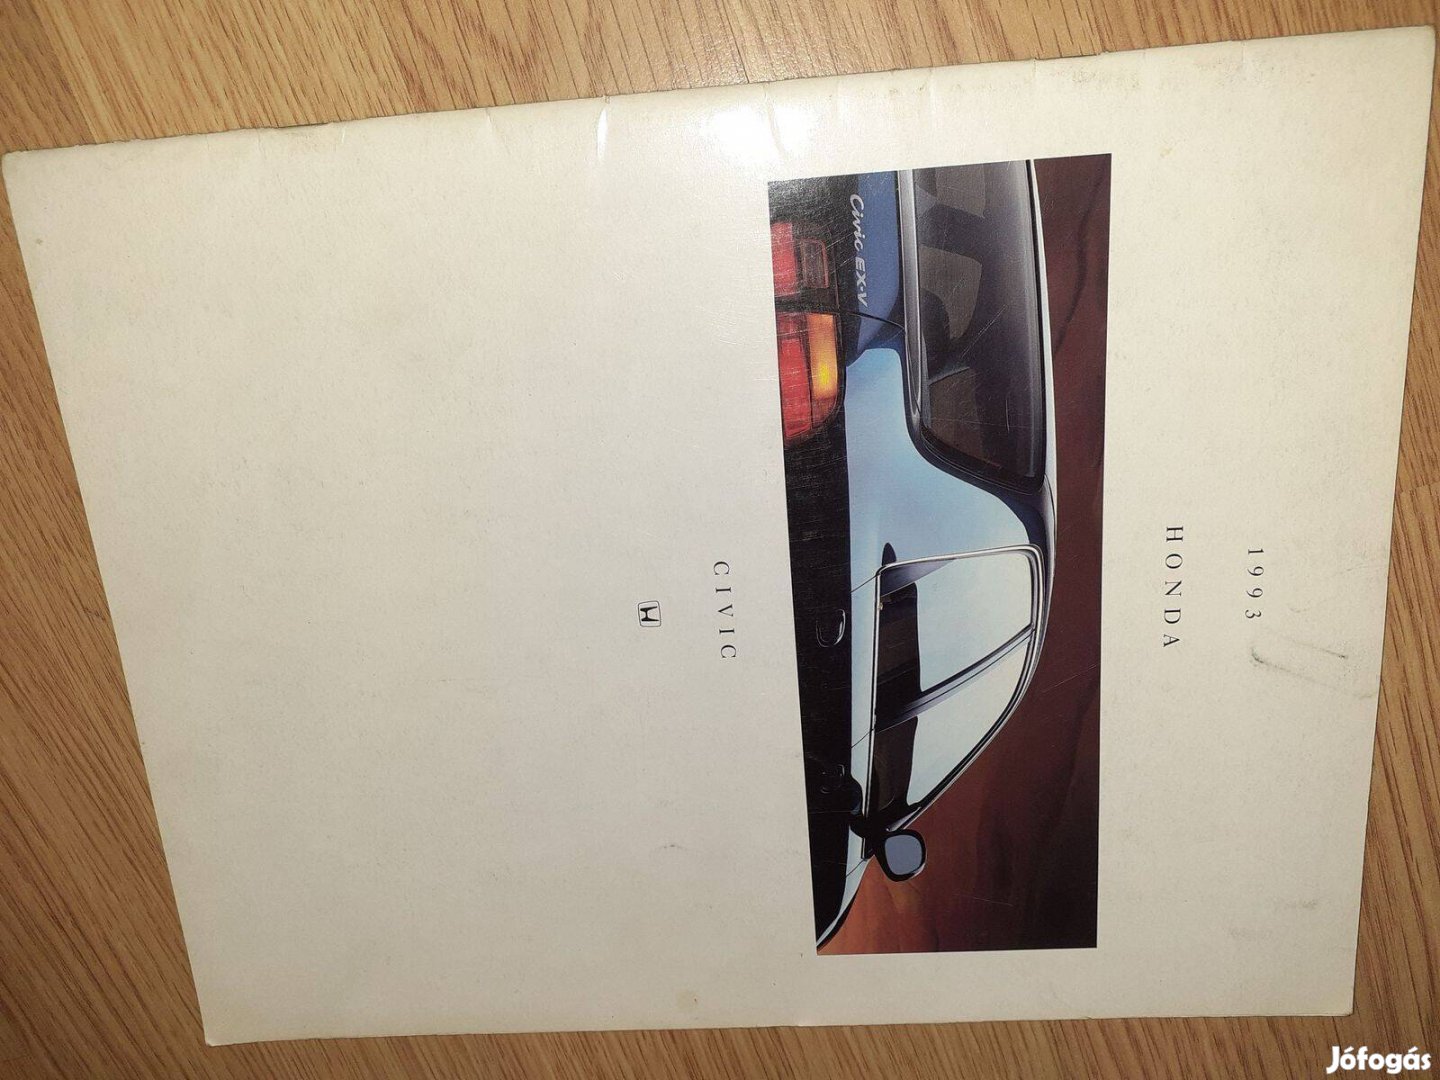 Honda Civic 1993 prospektus - 1992, angol nyelvű